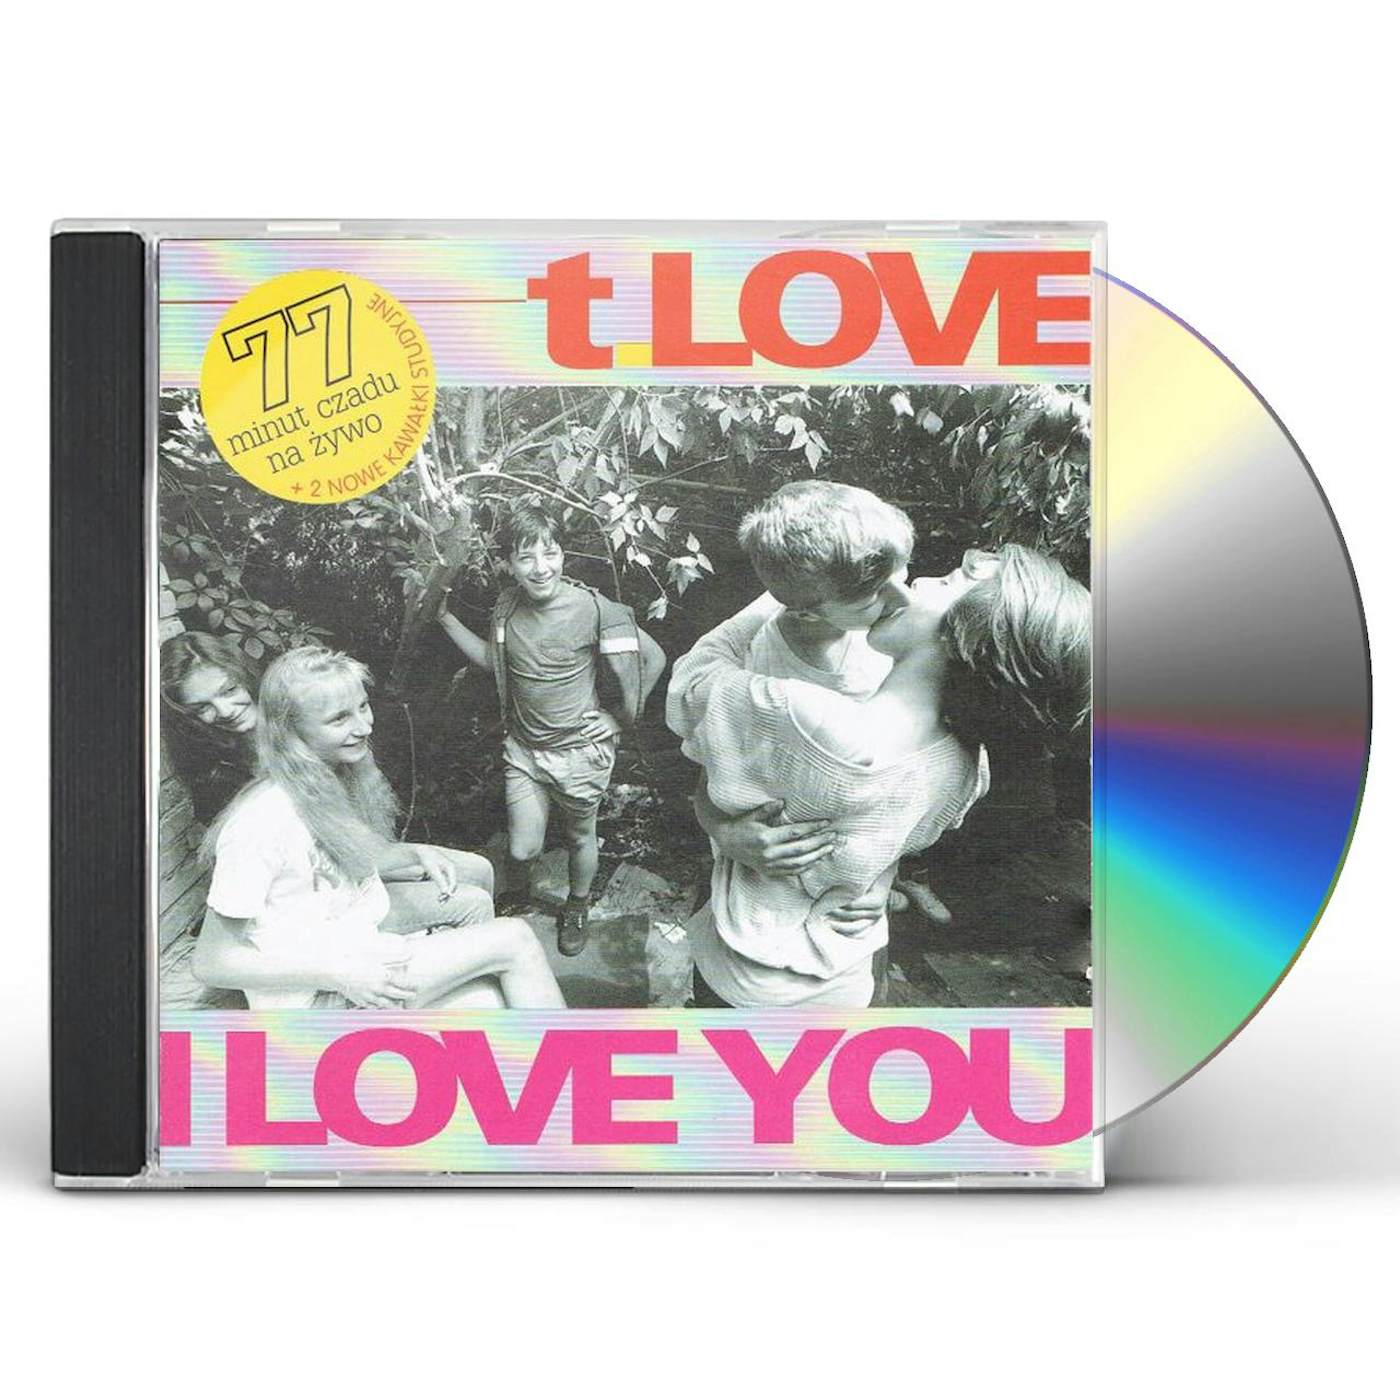 People I LOVE YOU CD